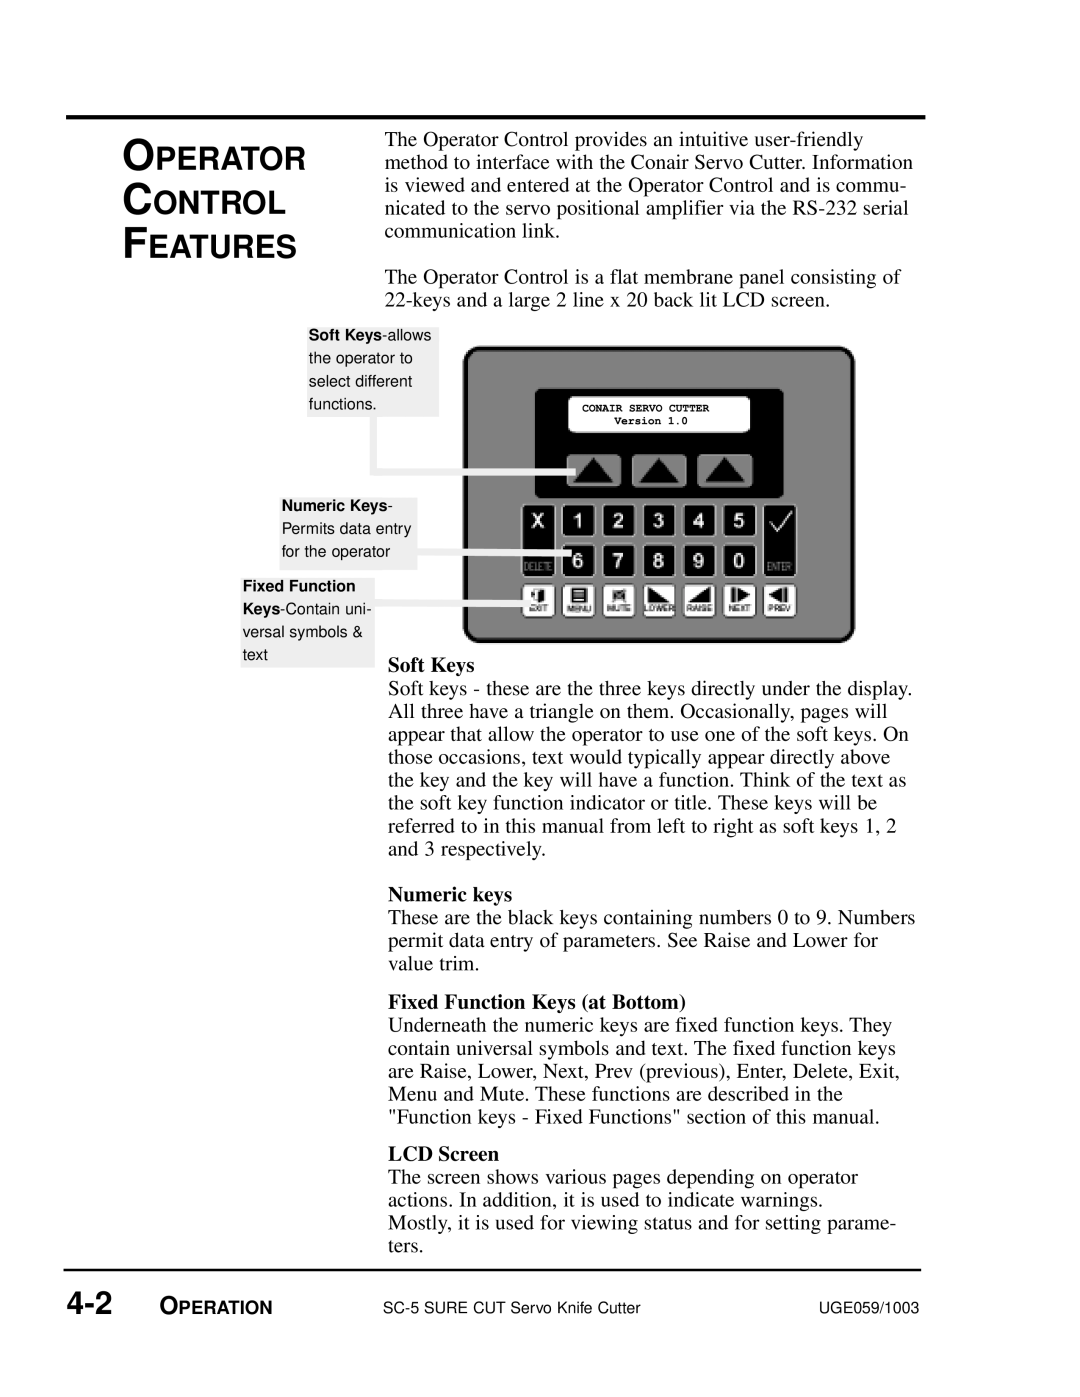 Conair SC-5 manual Operator Control Features, Soft Keys, Numeric keys, Fixed Function Keys at Bottom, LCD Screen 